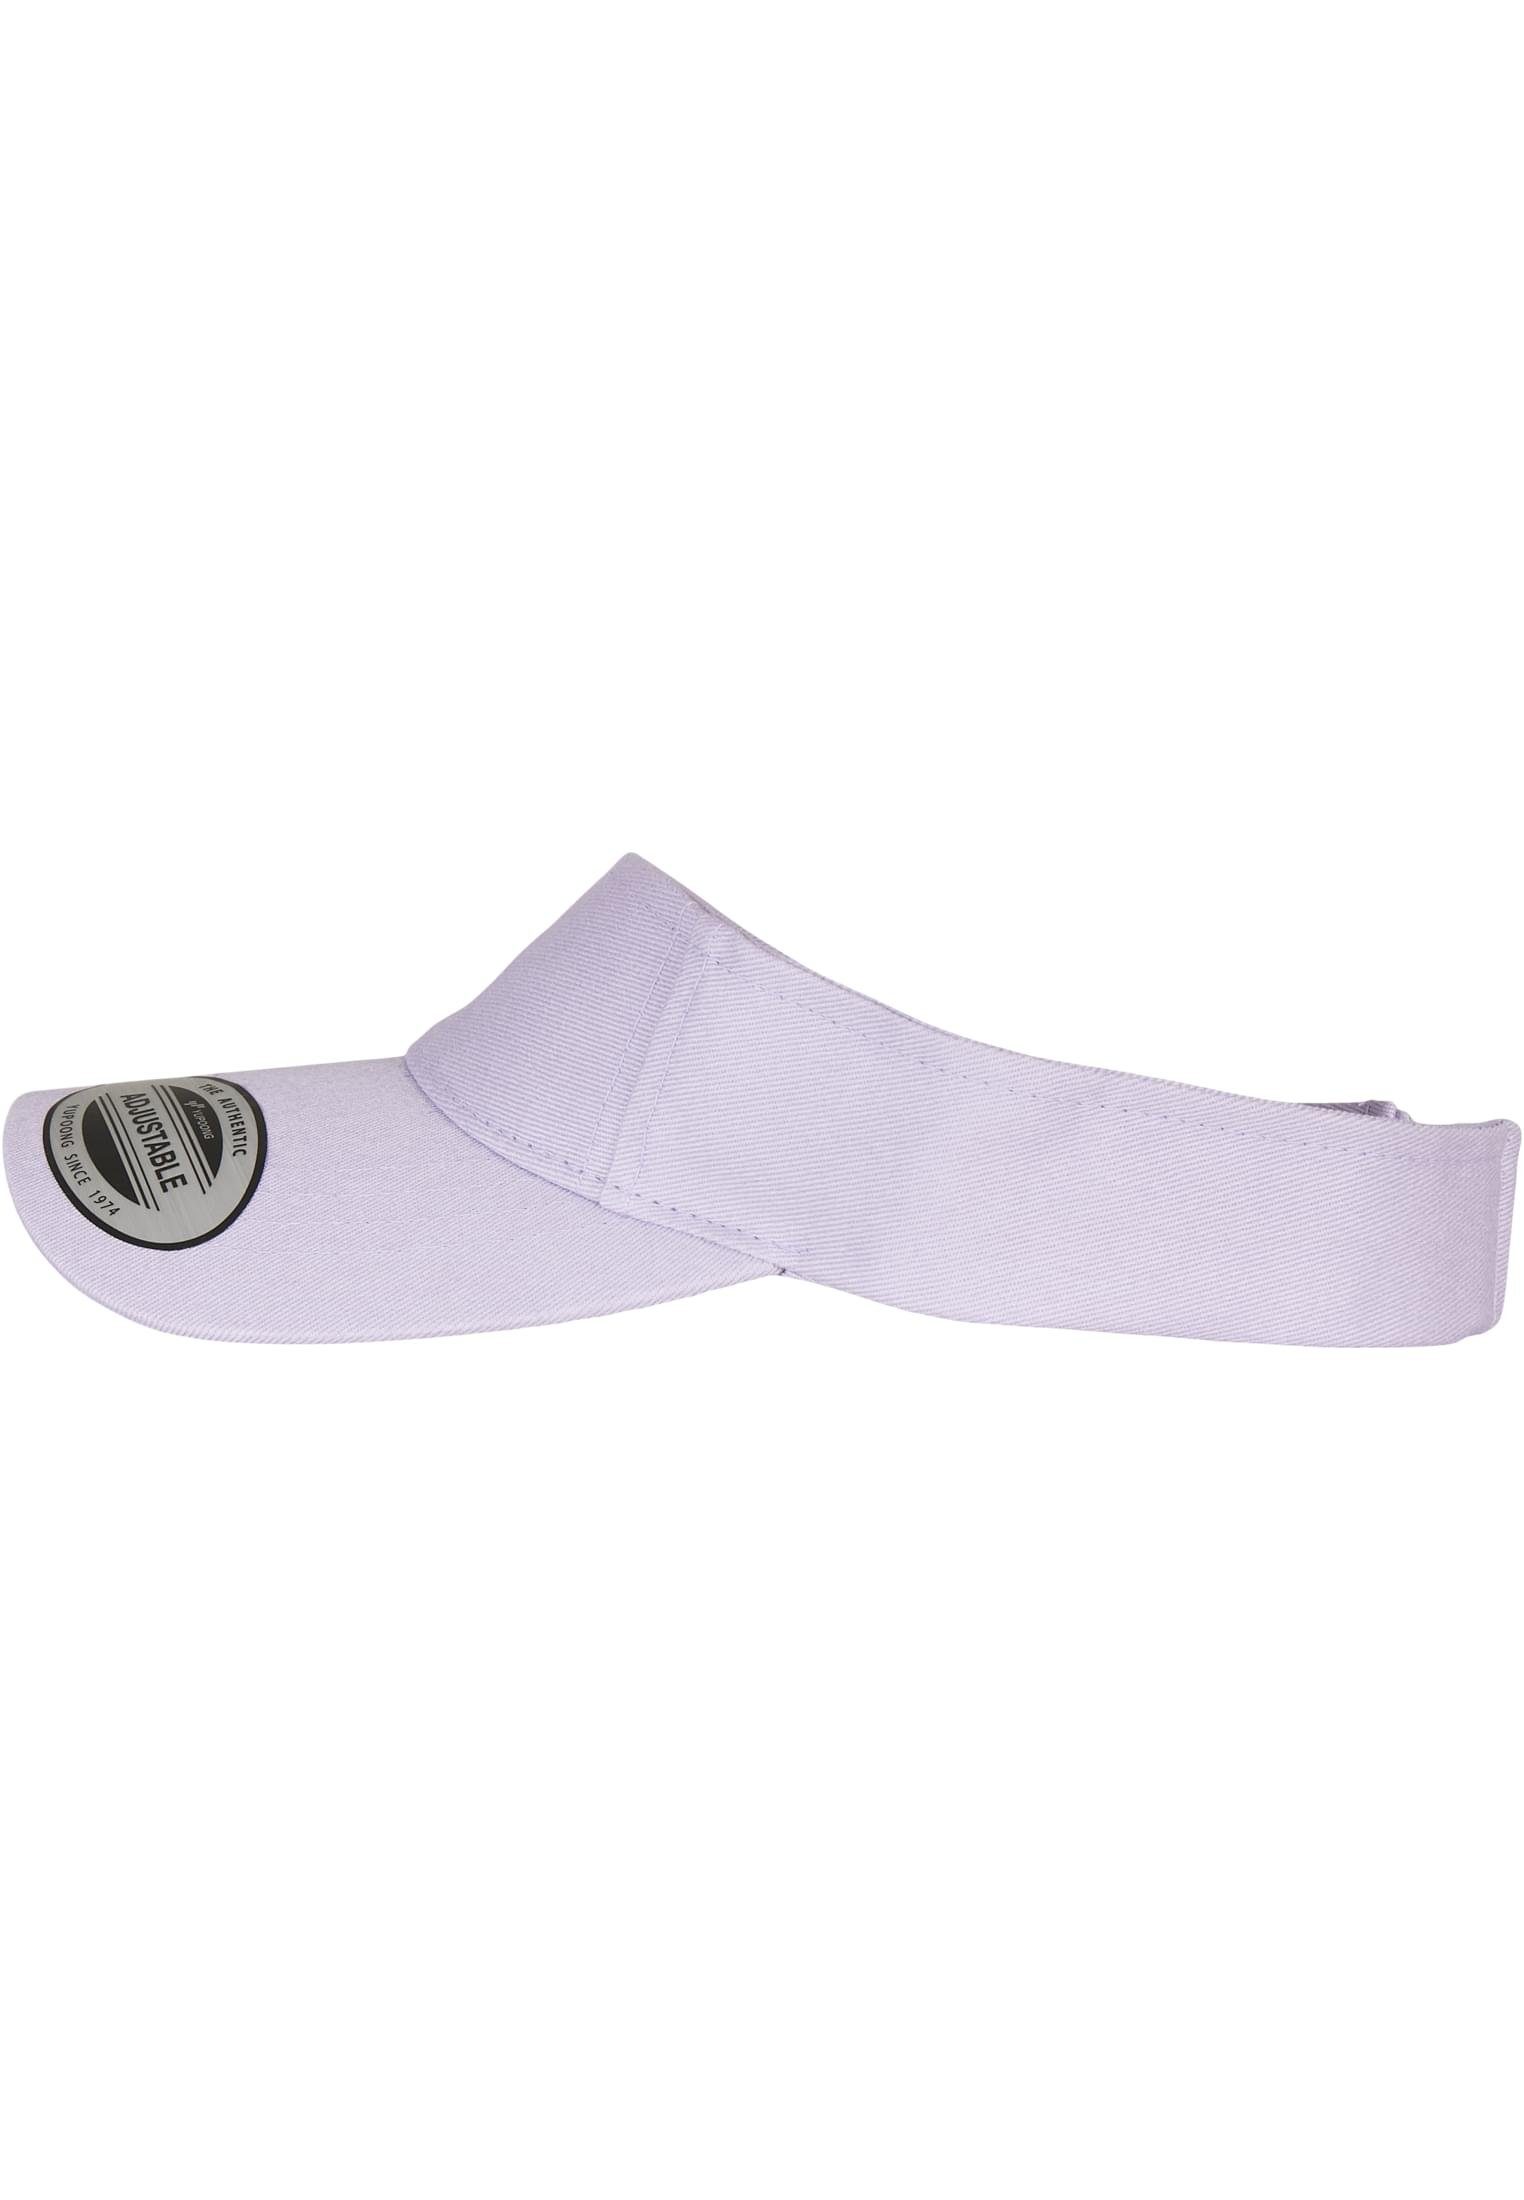 Accessoires Curved Cap Flexfit Flex lilac Cap Visor